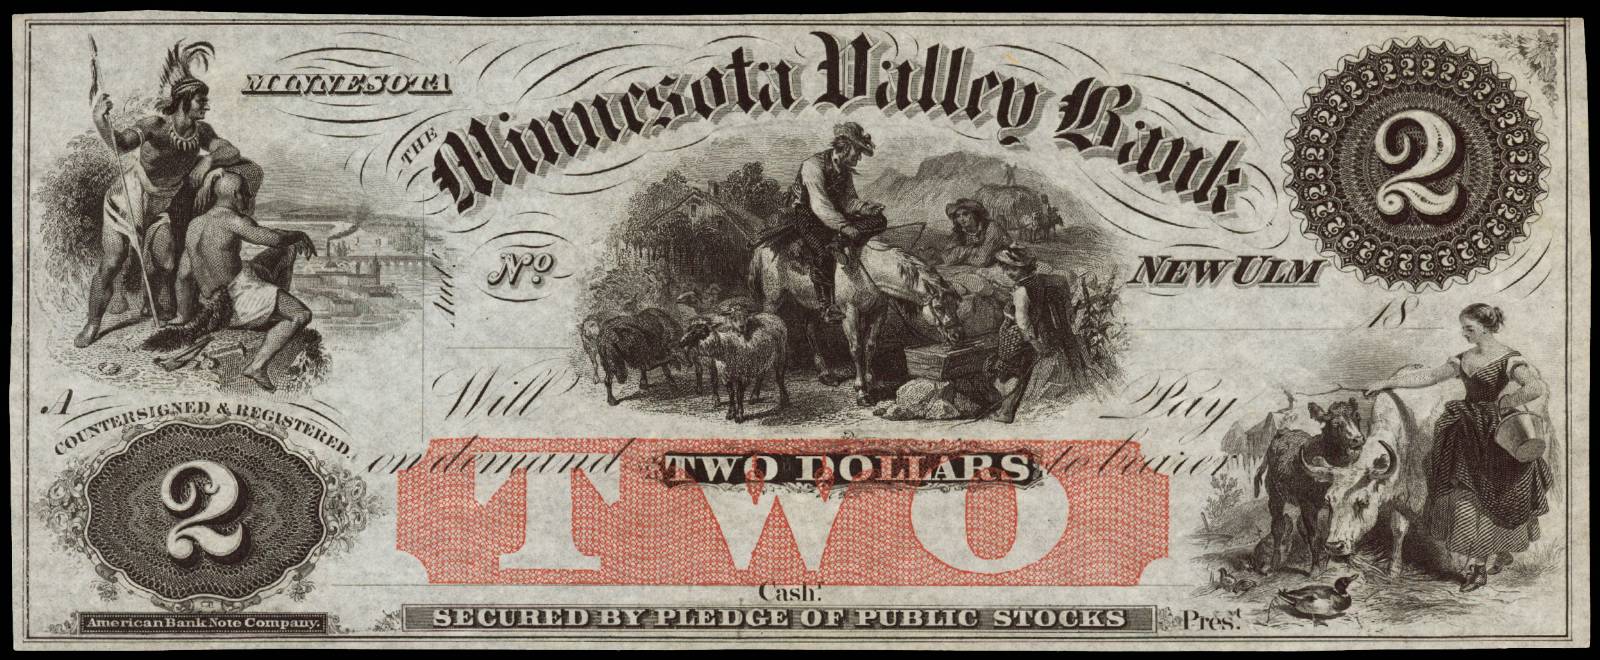 $2 Minnesota Valley Bank